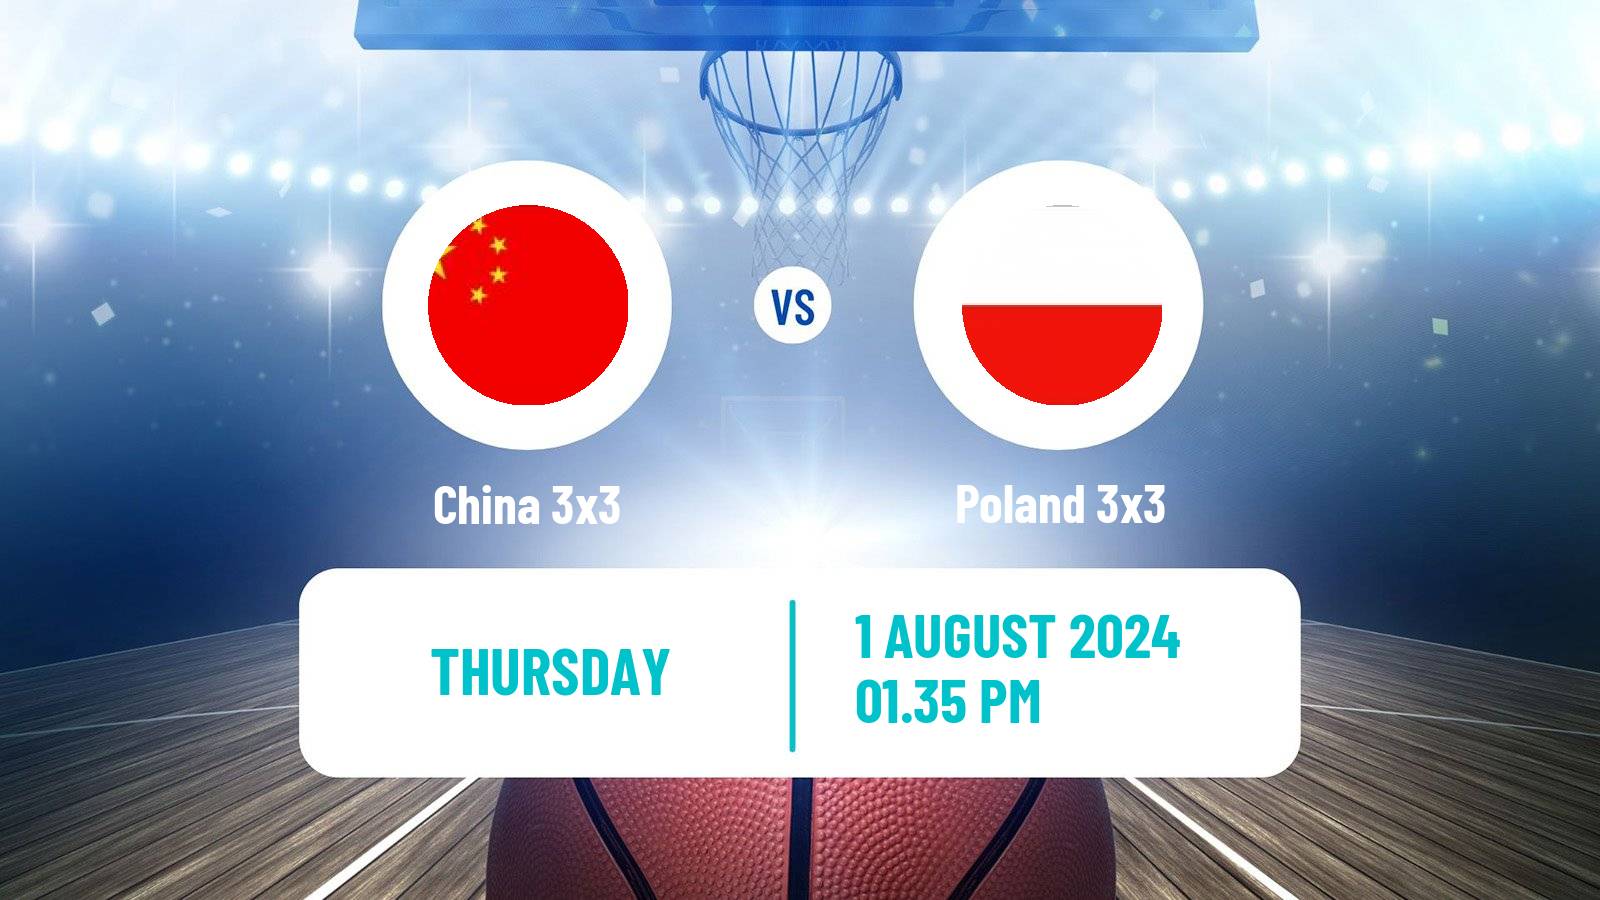 Basketball Olympic Games Basketball 3x3 China 3x3 - Poland 3x3